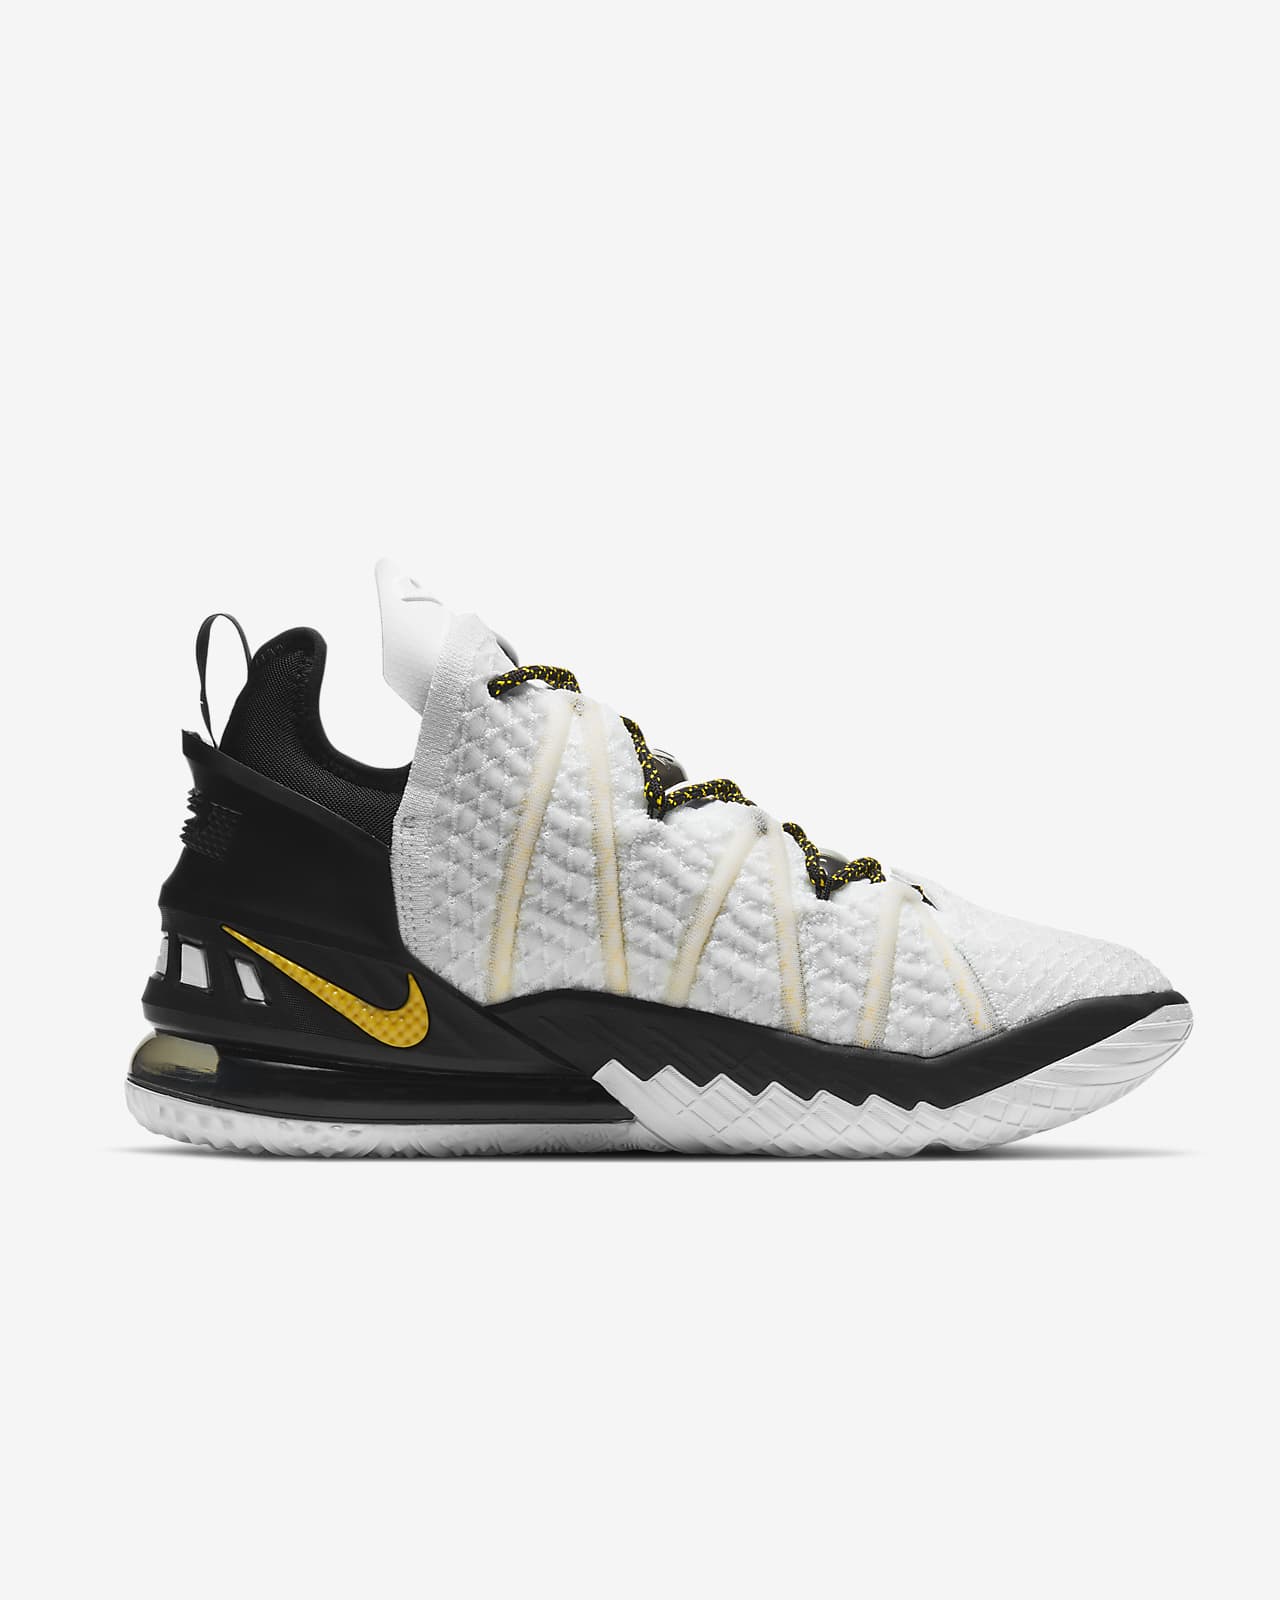 Black/Gold' Basketball Shoe. Nike SG